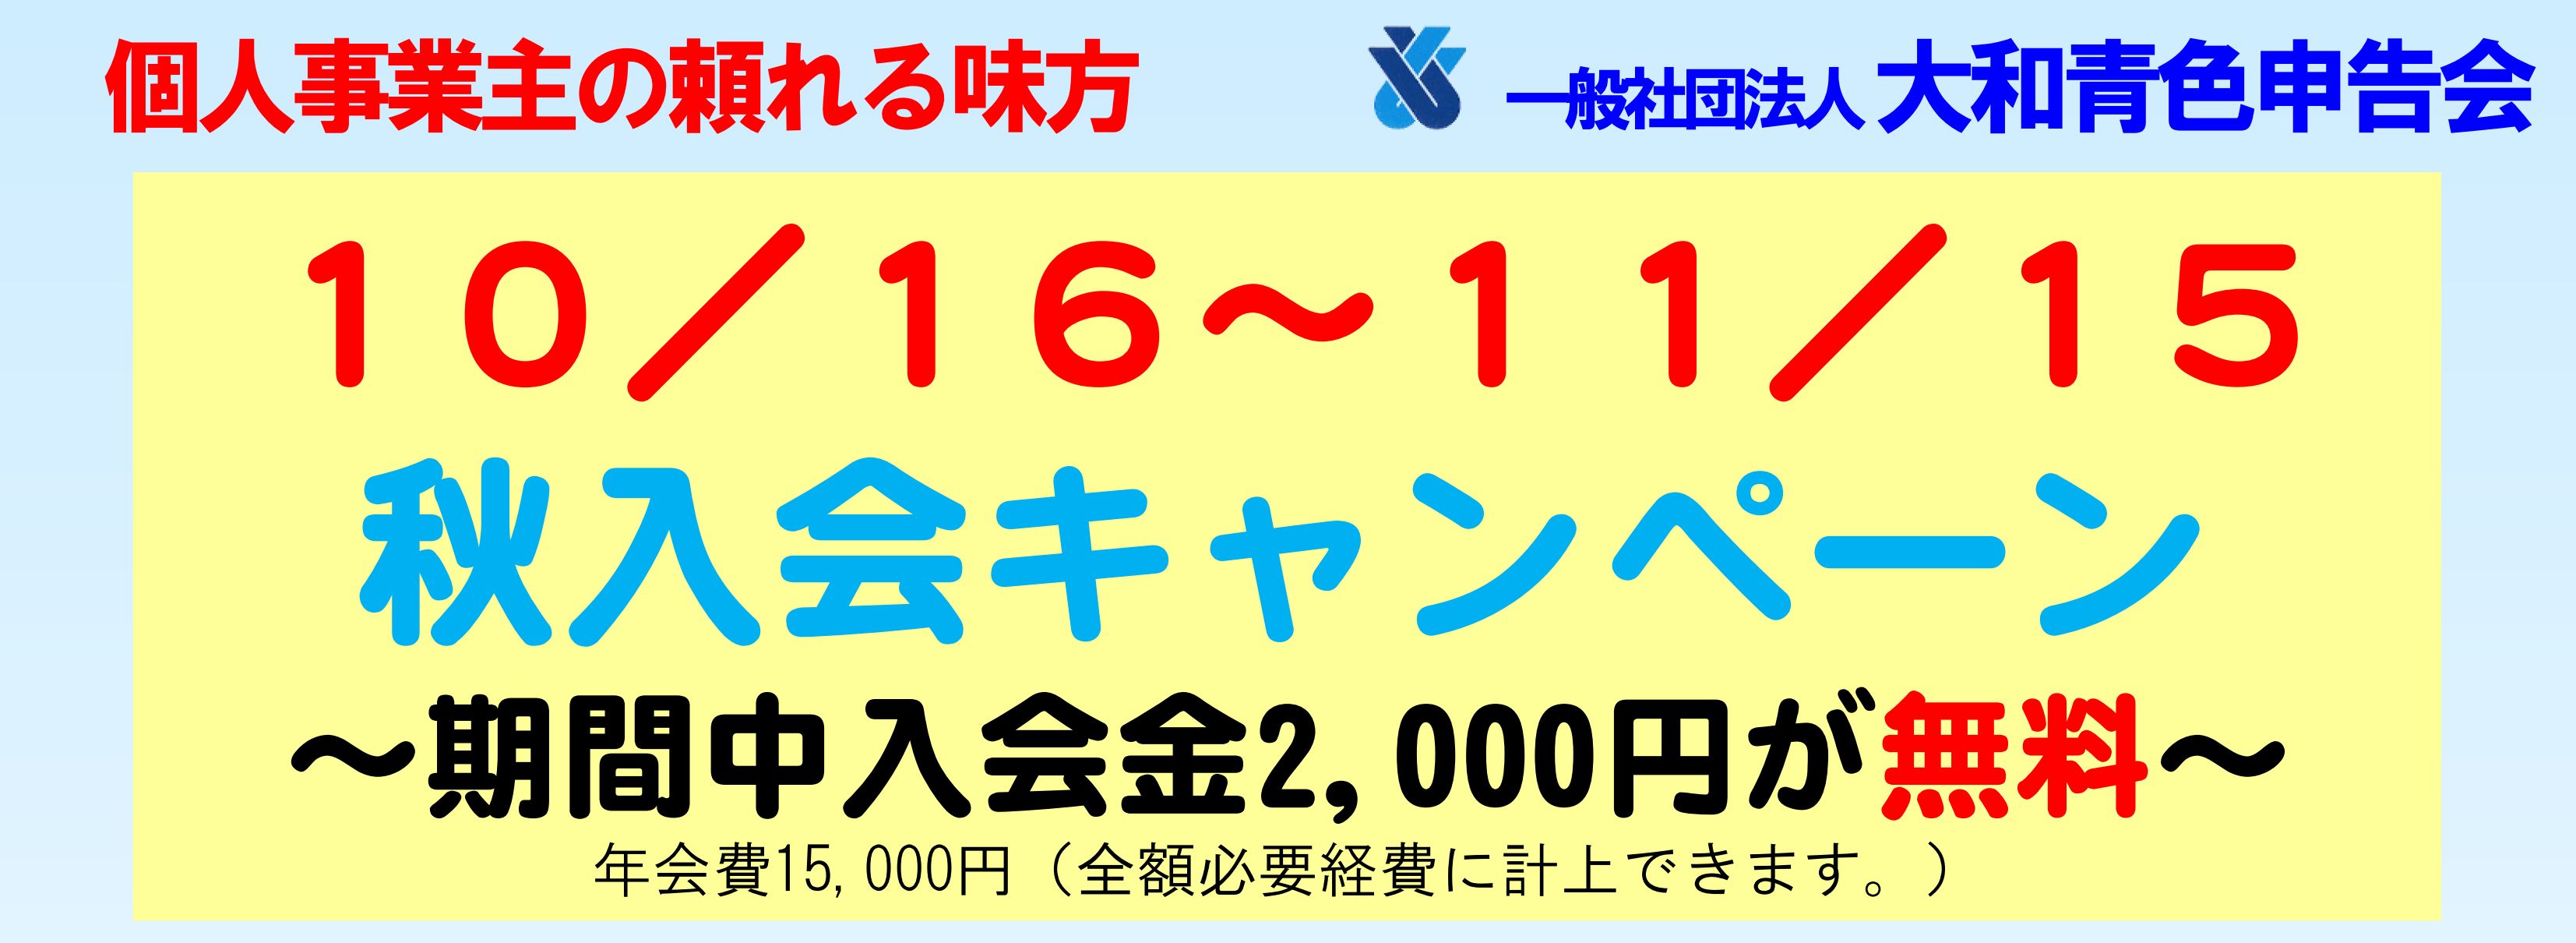 http://www.shokonet.or.jp/aoiro/yamato/news/campaign%20title.jpg